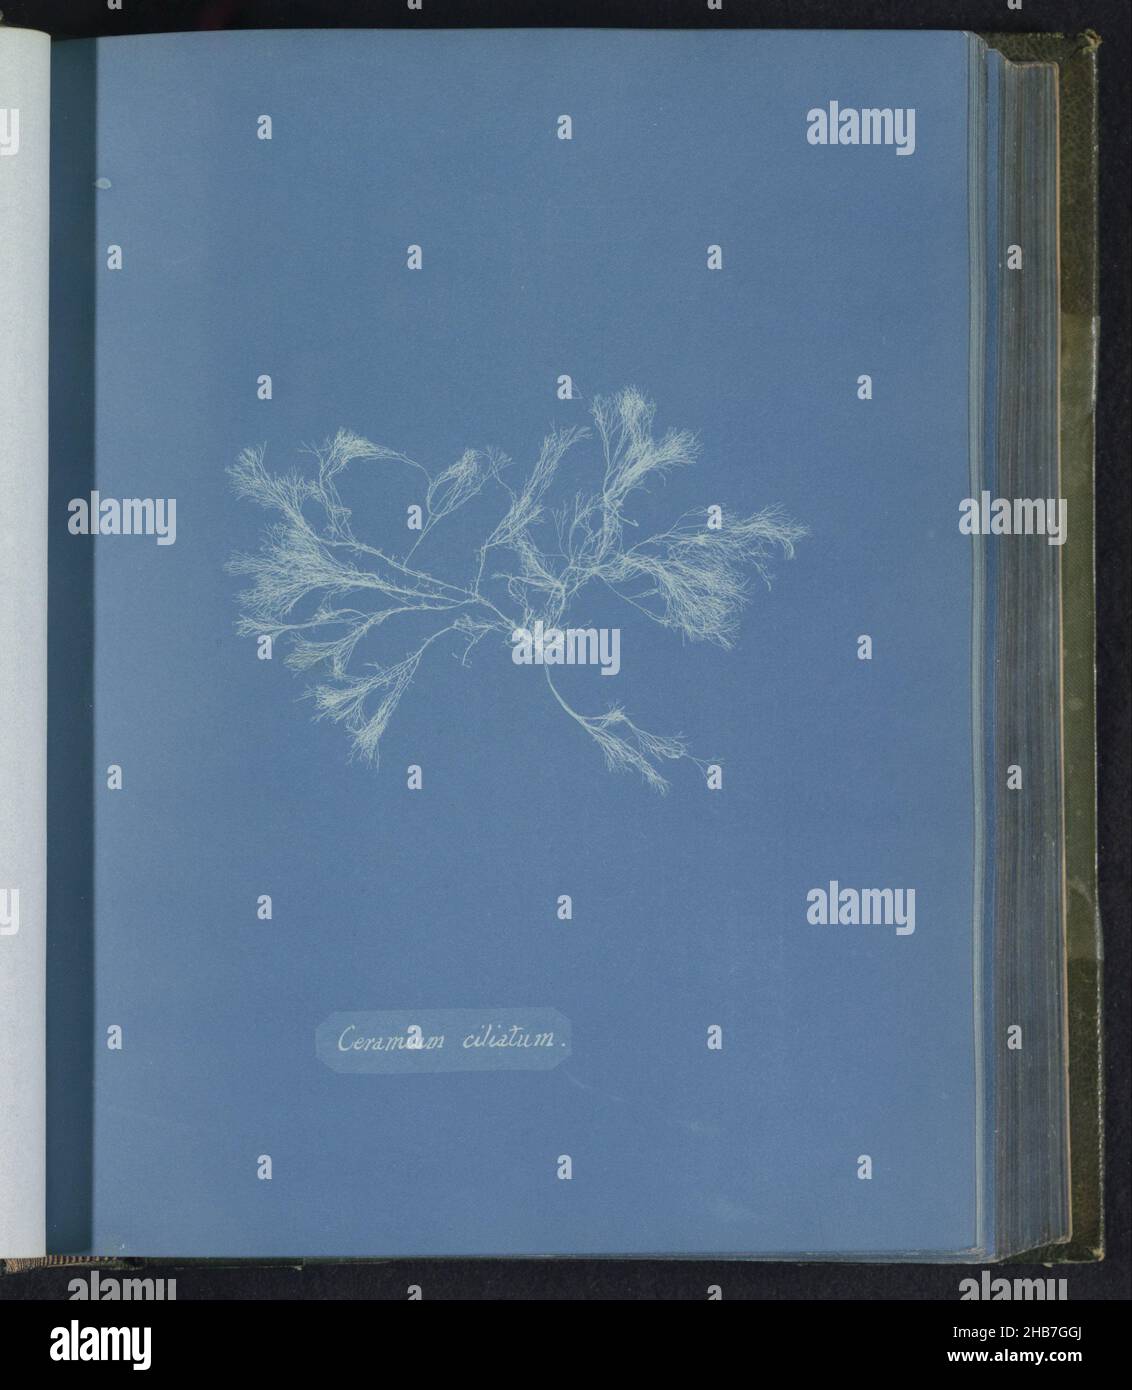 Ceramium ciliatum, Anna Atkins, United Kingdom, c. 1843 - c. 1853, photographic support, cyanotype, height 250 mm × width 200 mm Stock Photo